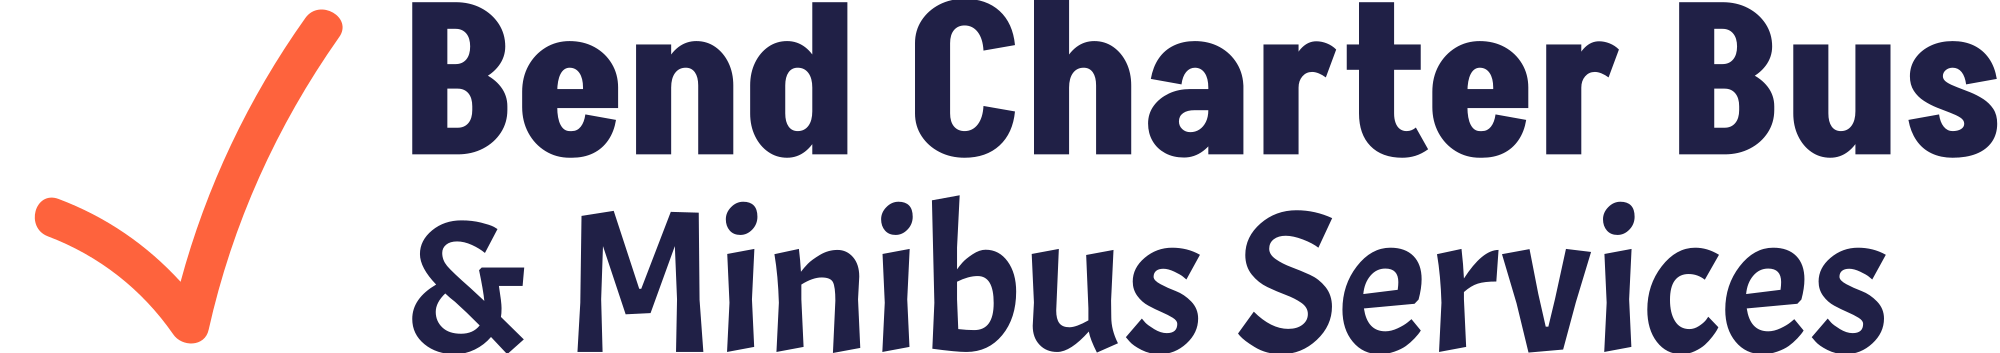 Charter Bus Company Bend logo